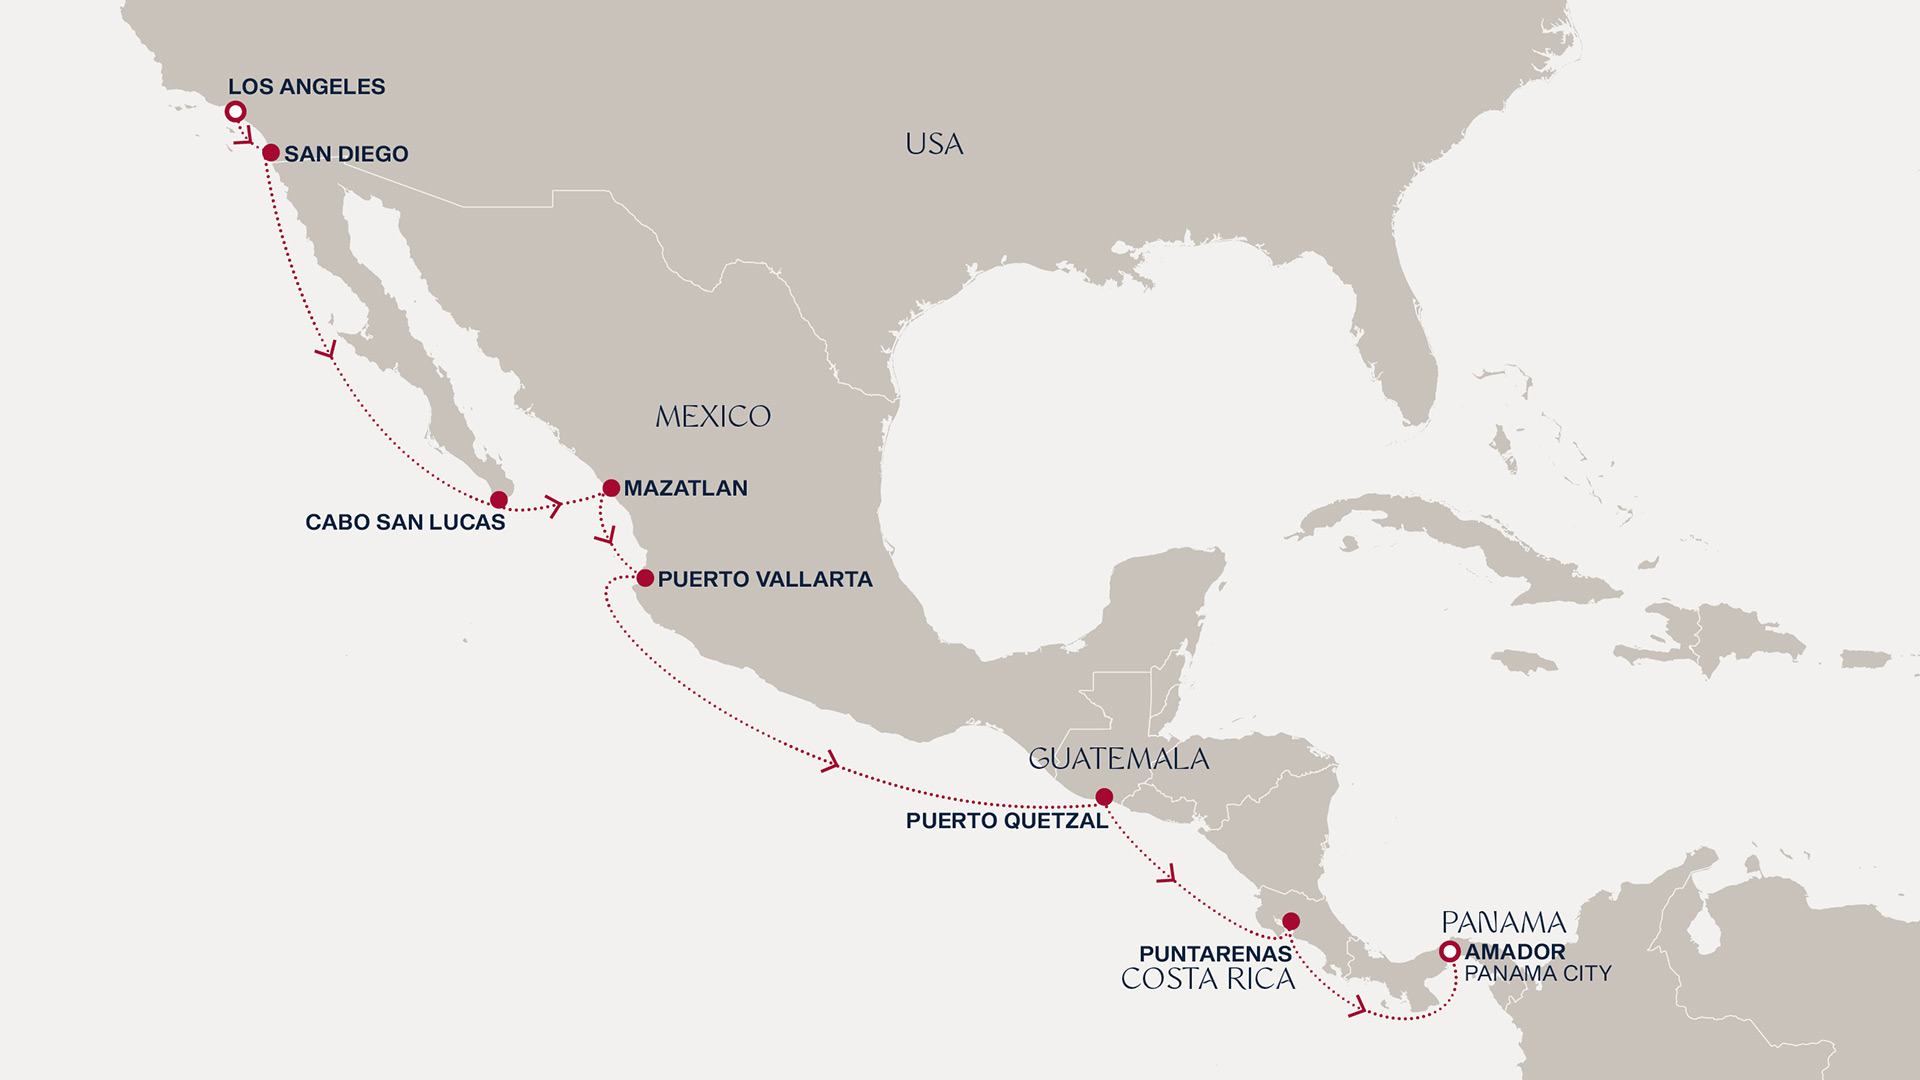 Cesta za tichomořskými radovánkami a Panamským průplavem